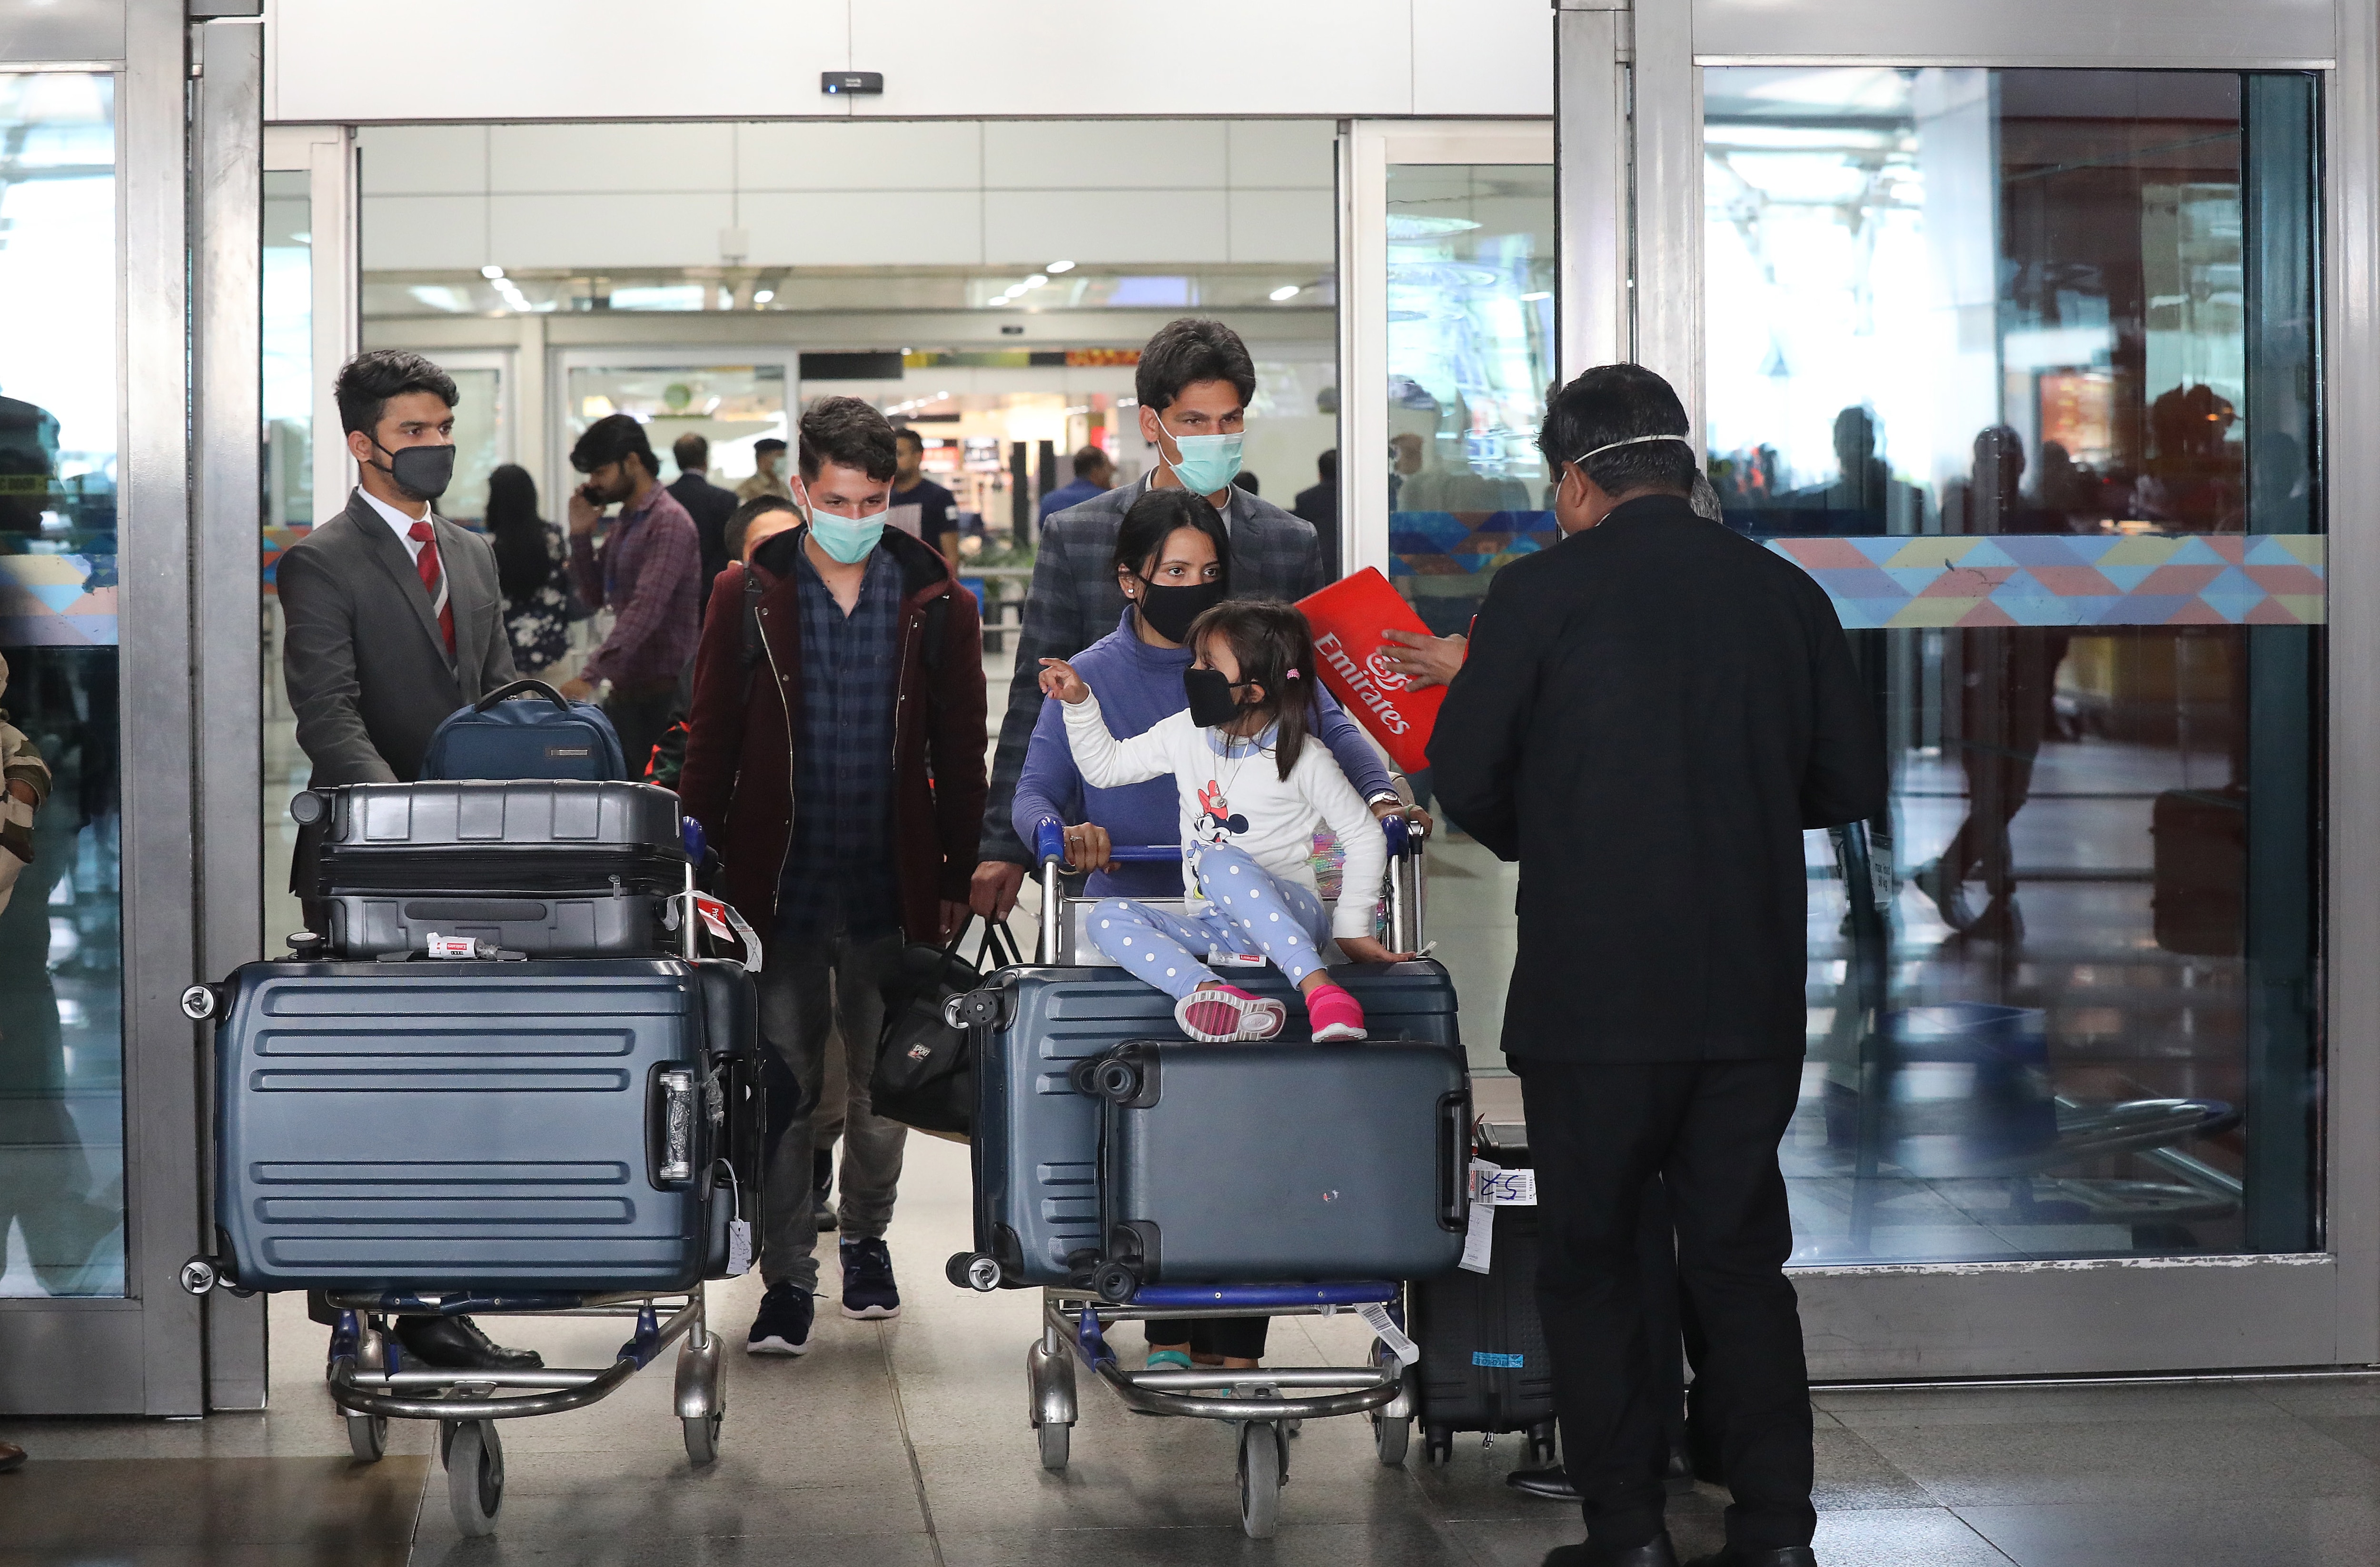 Passengers at the Indira Gandhi International airport in New Delhi, India, 12 March 2020.